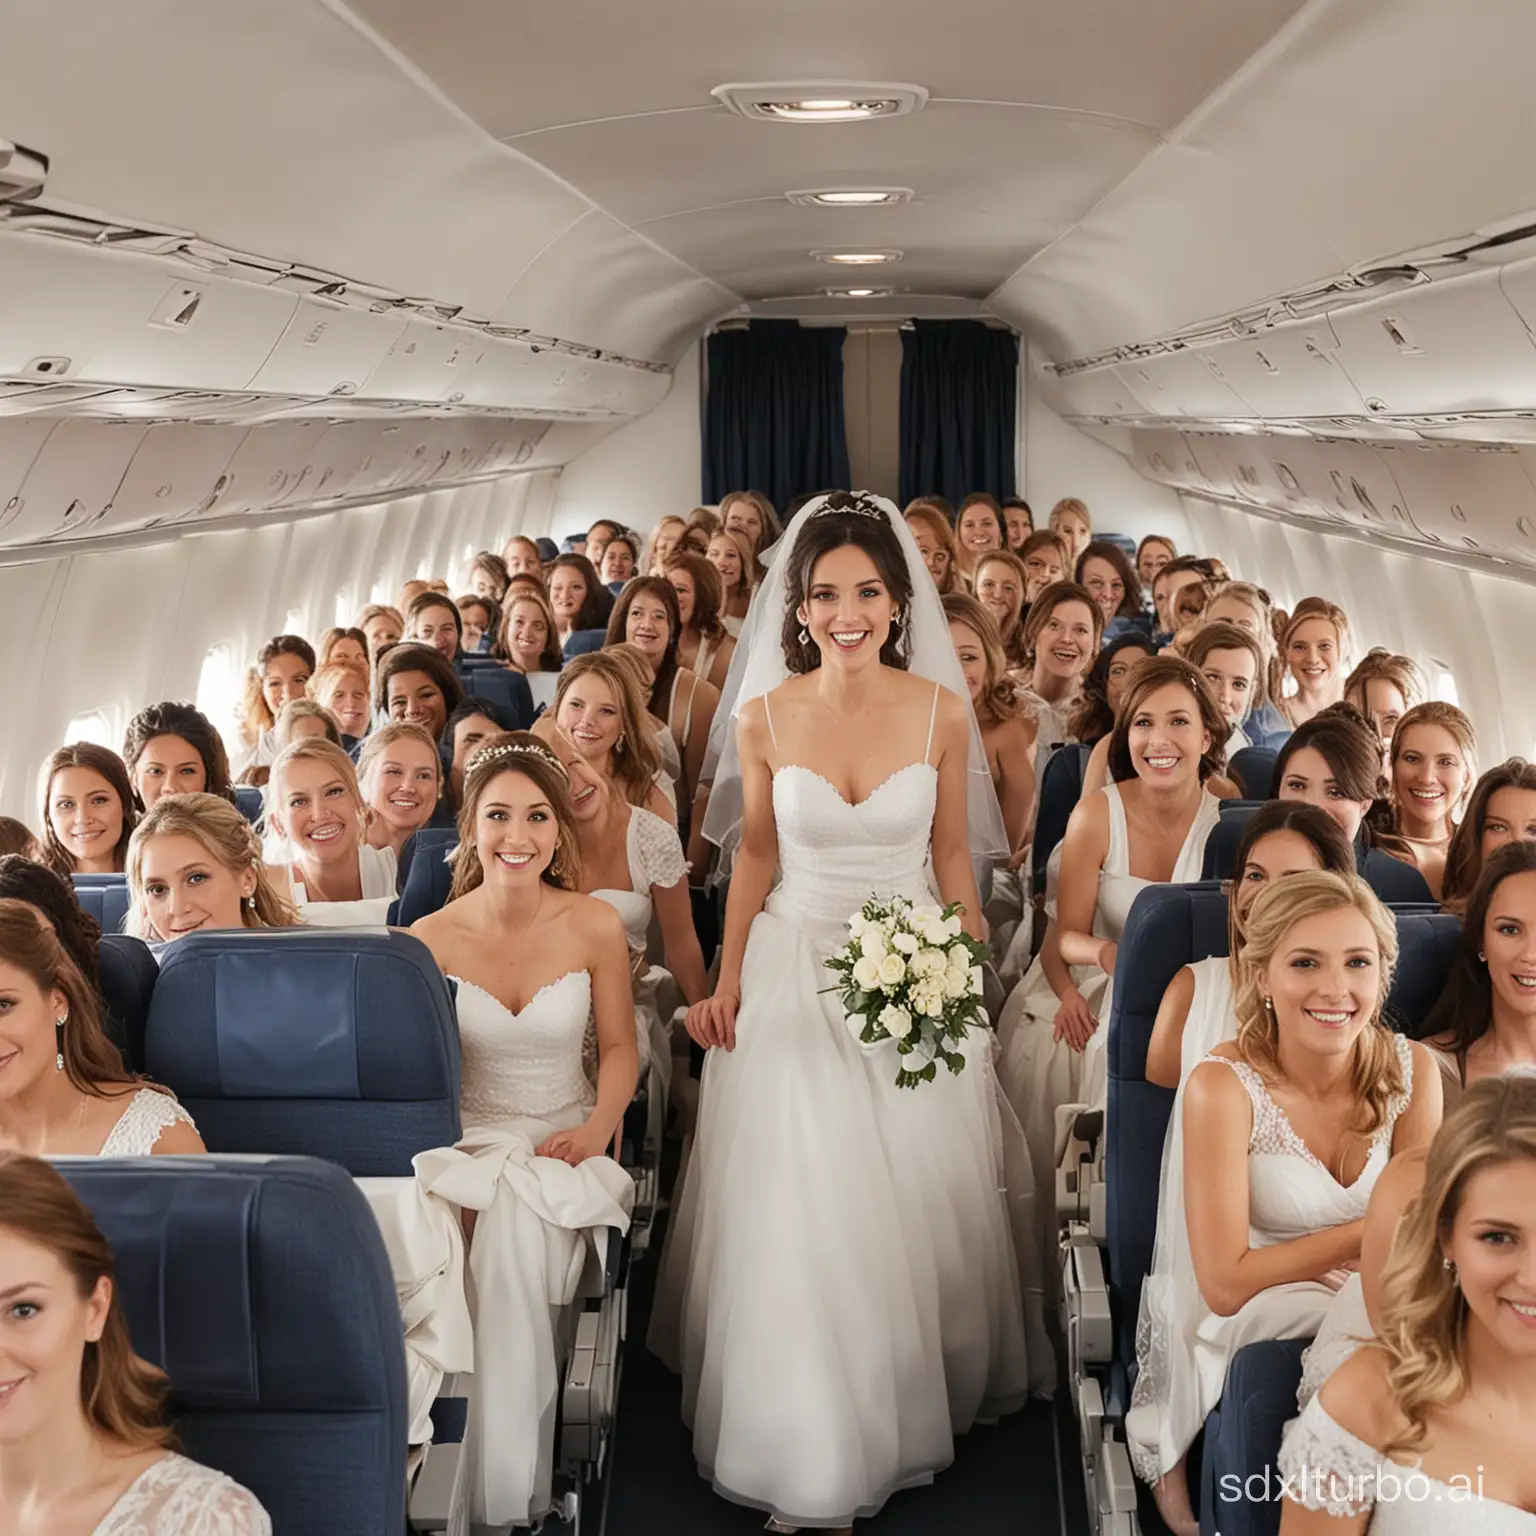 Glamorous-Brides-Boarding-a-Plane-for-Destination-Weddings